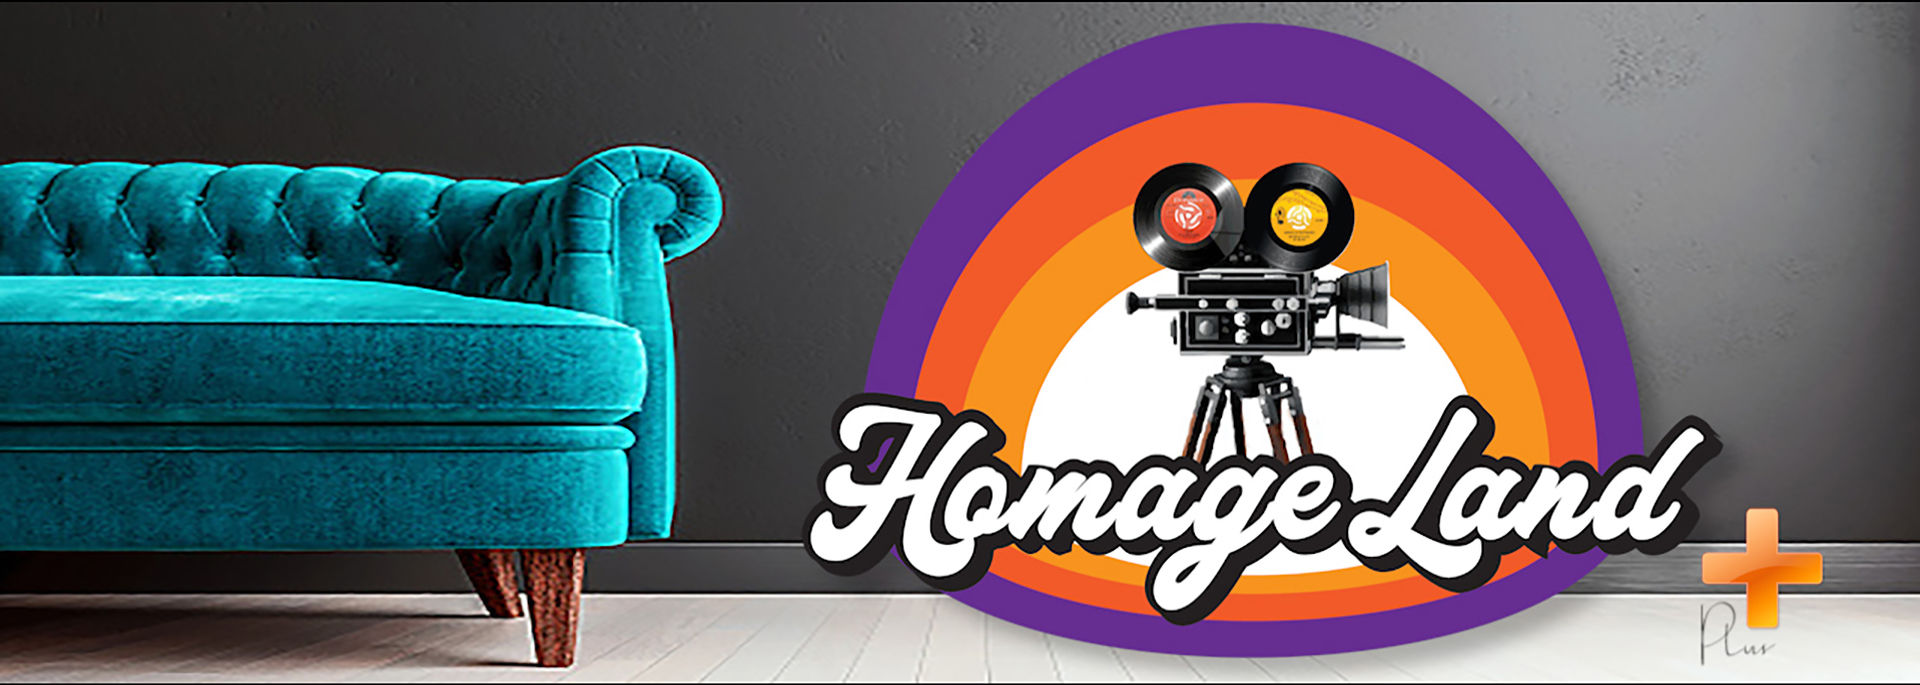 HomagelandTV Plus+ channel